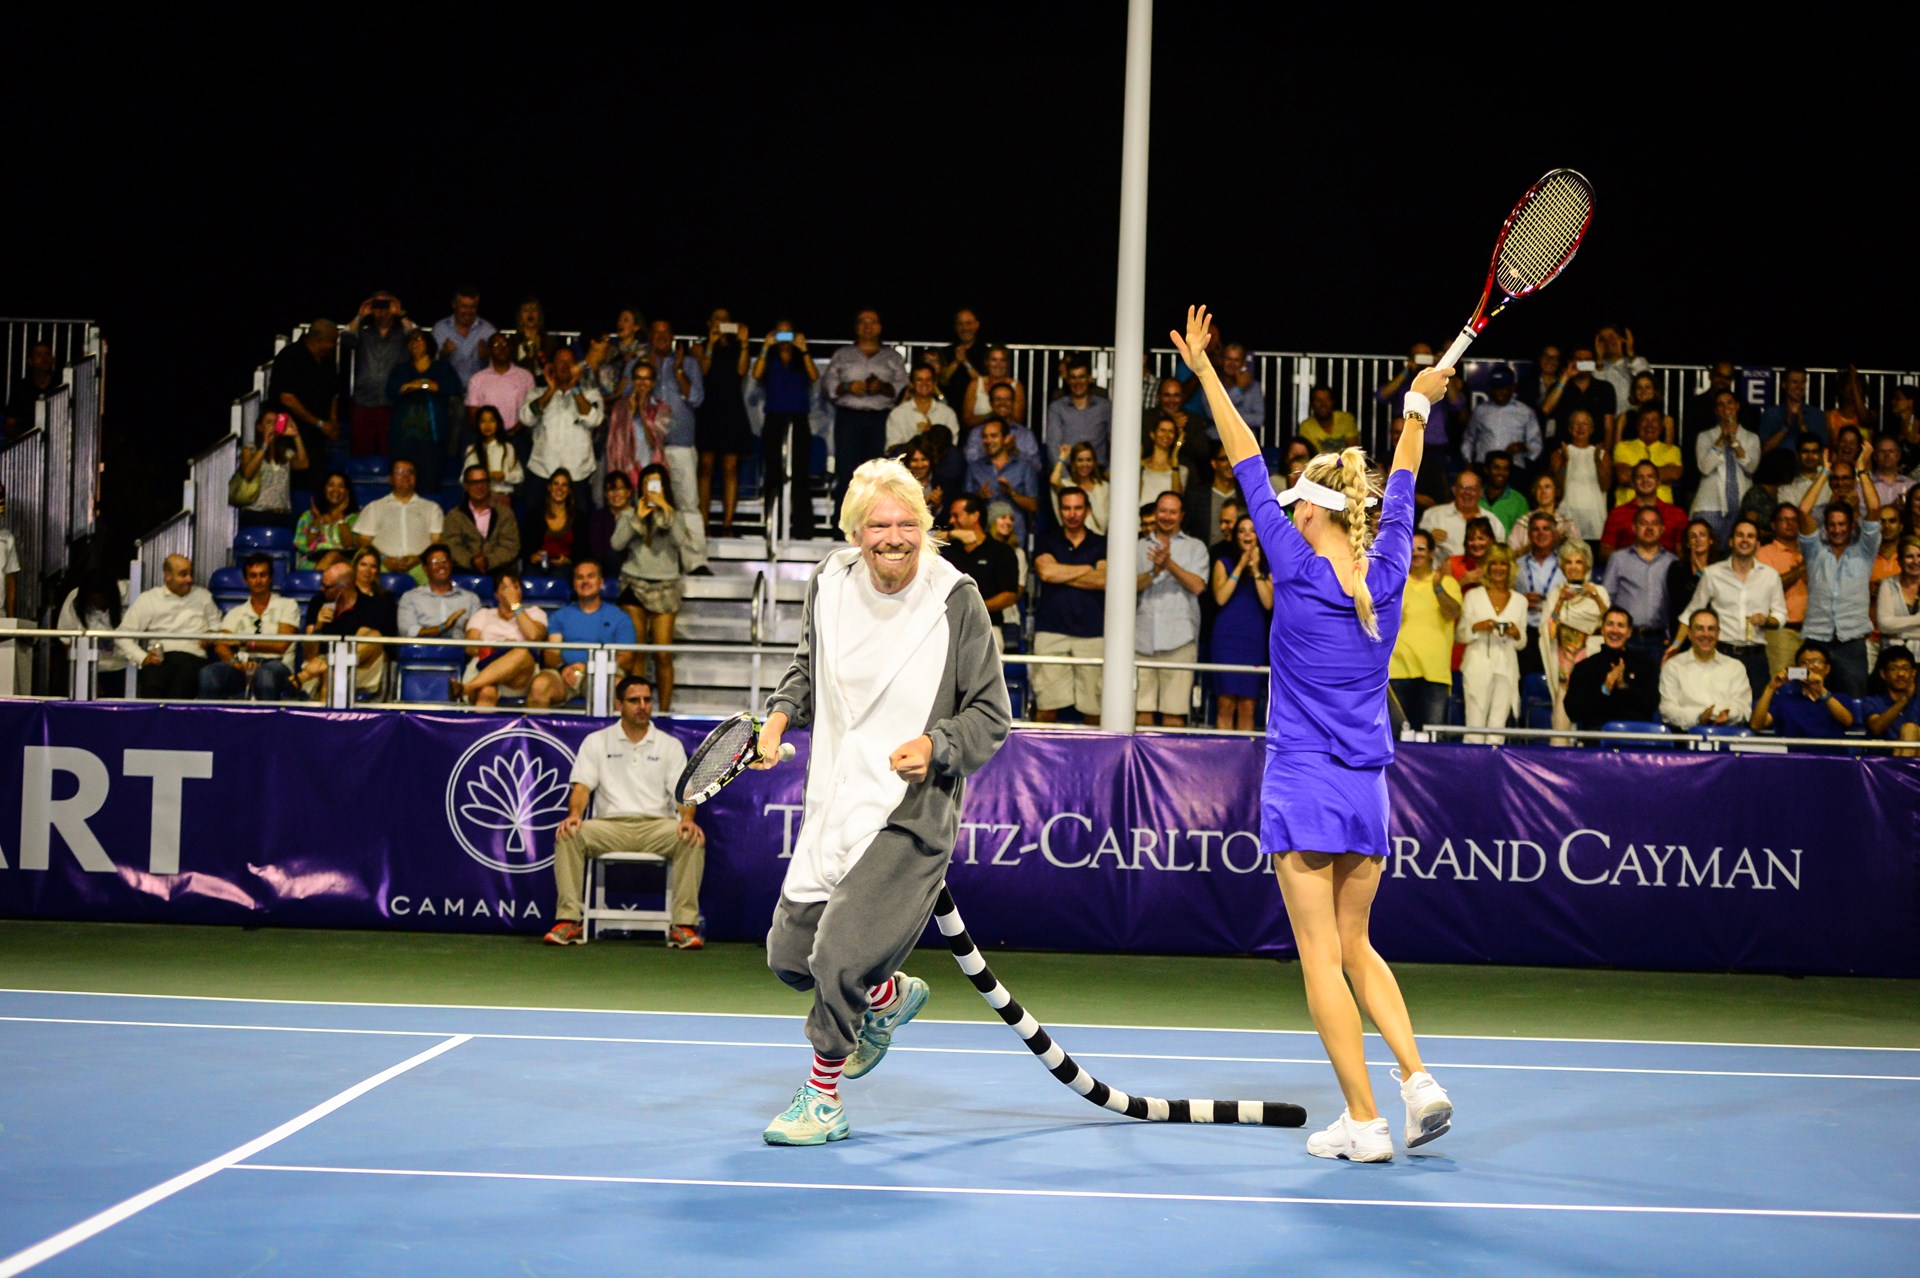 Richard Branson anna Kournikova play tennis on Grand Cayman